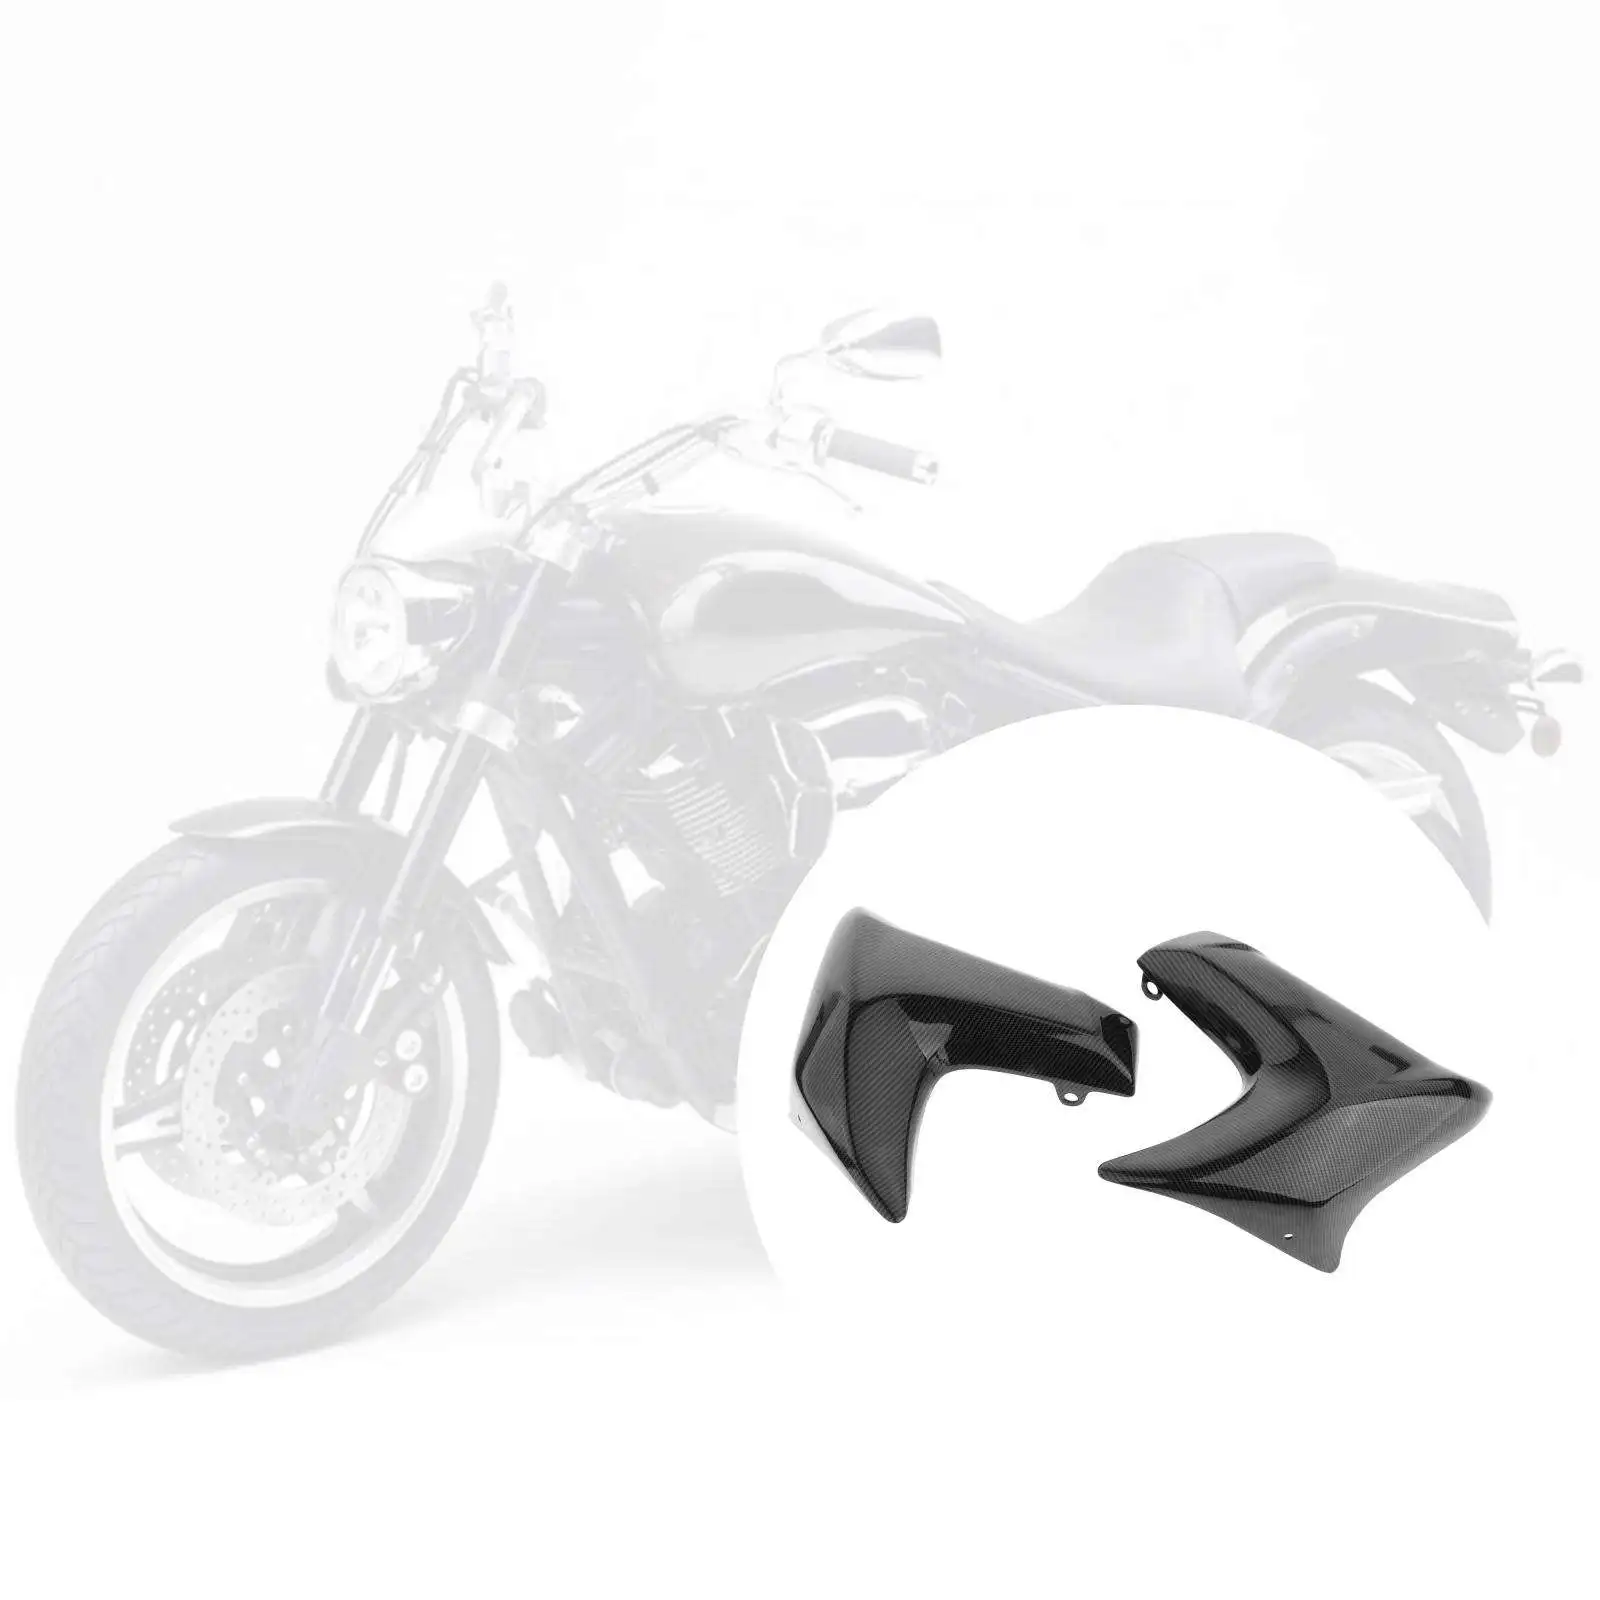 1 Pair Left & Right Motorcycle Radiator Cover Fairing Protector Guard Replacement for Kawasaki ER6N 2012-16 Repair Parts